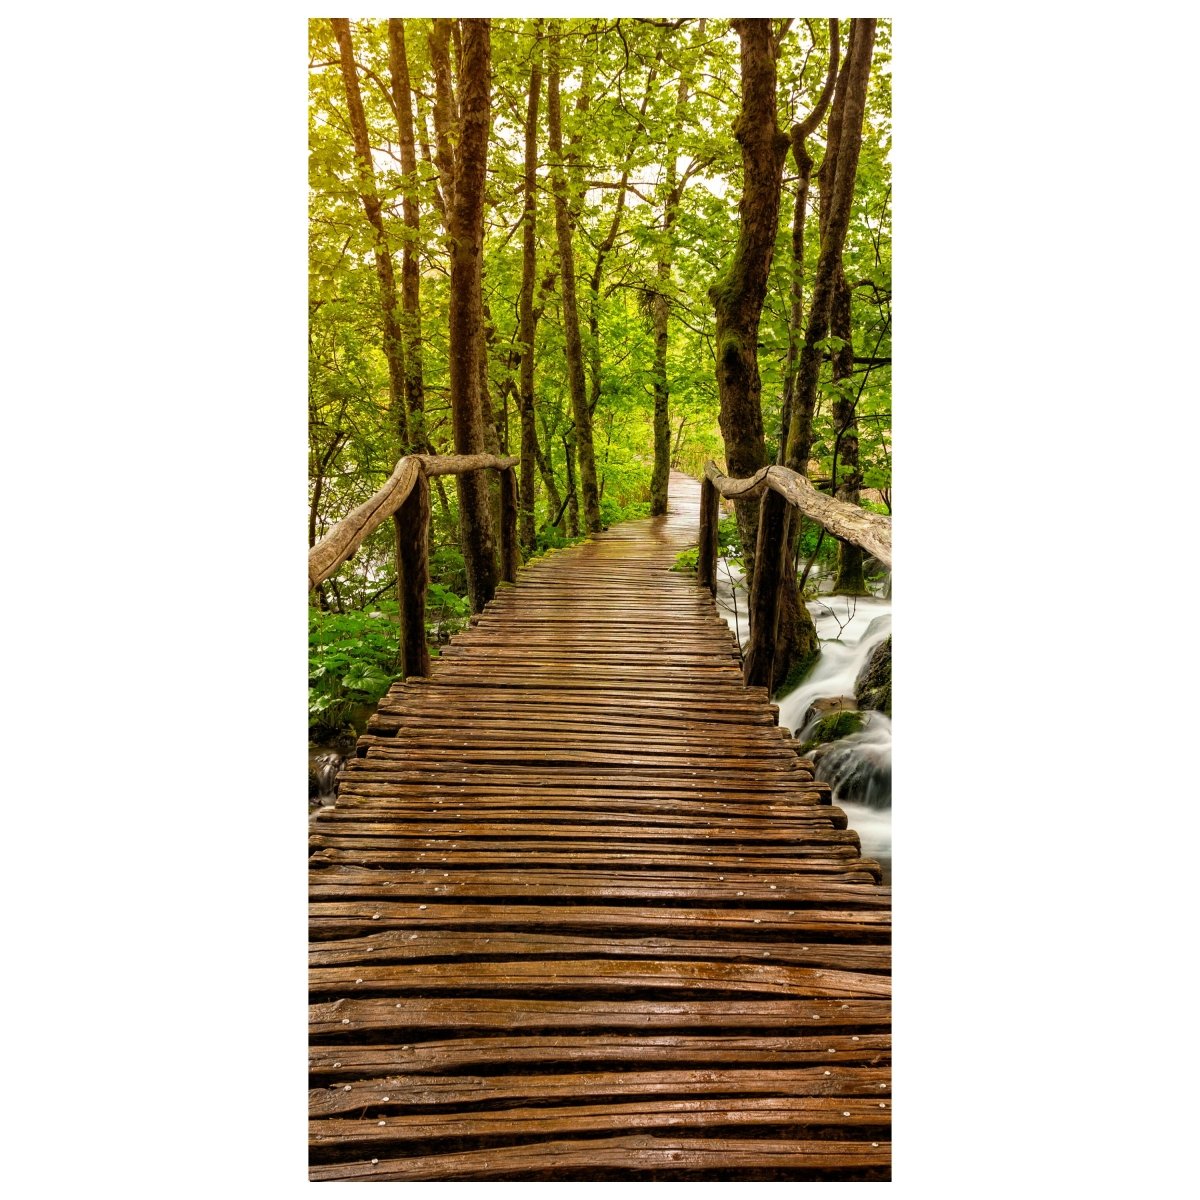 Türtapete nasser Holz-steg, Regen, Wald, Wald-weg M1081 - Bild 2